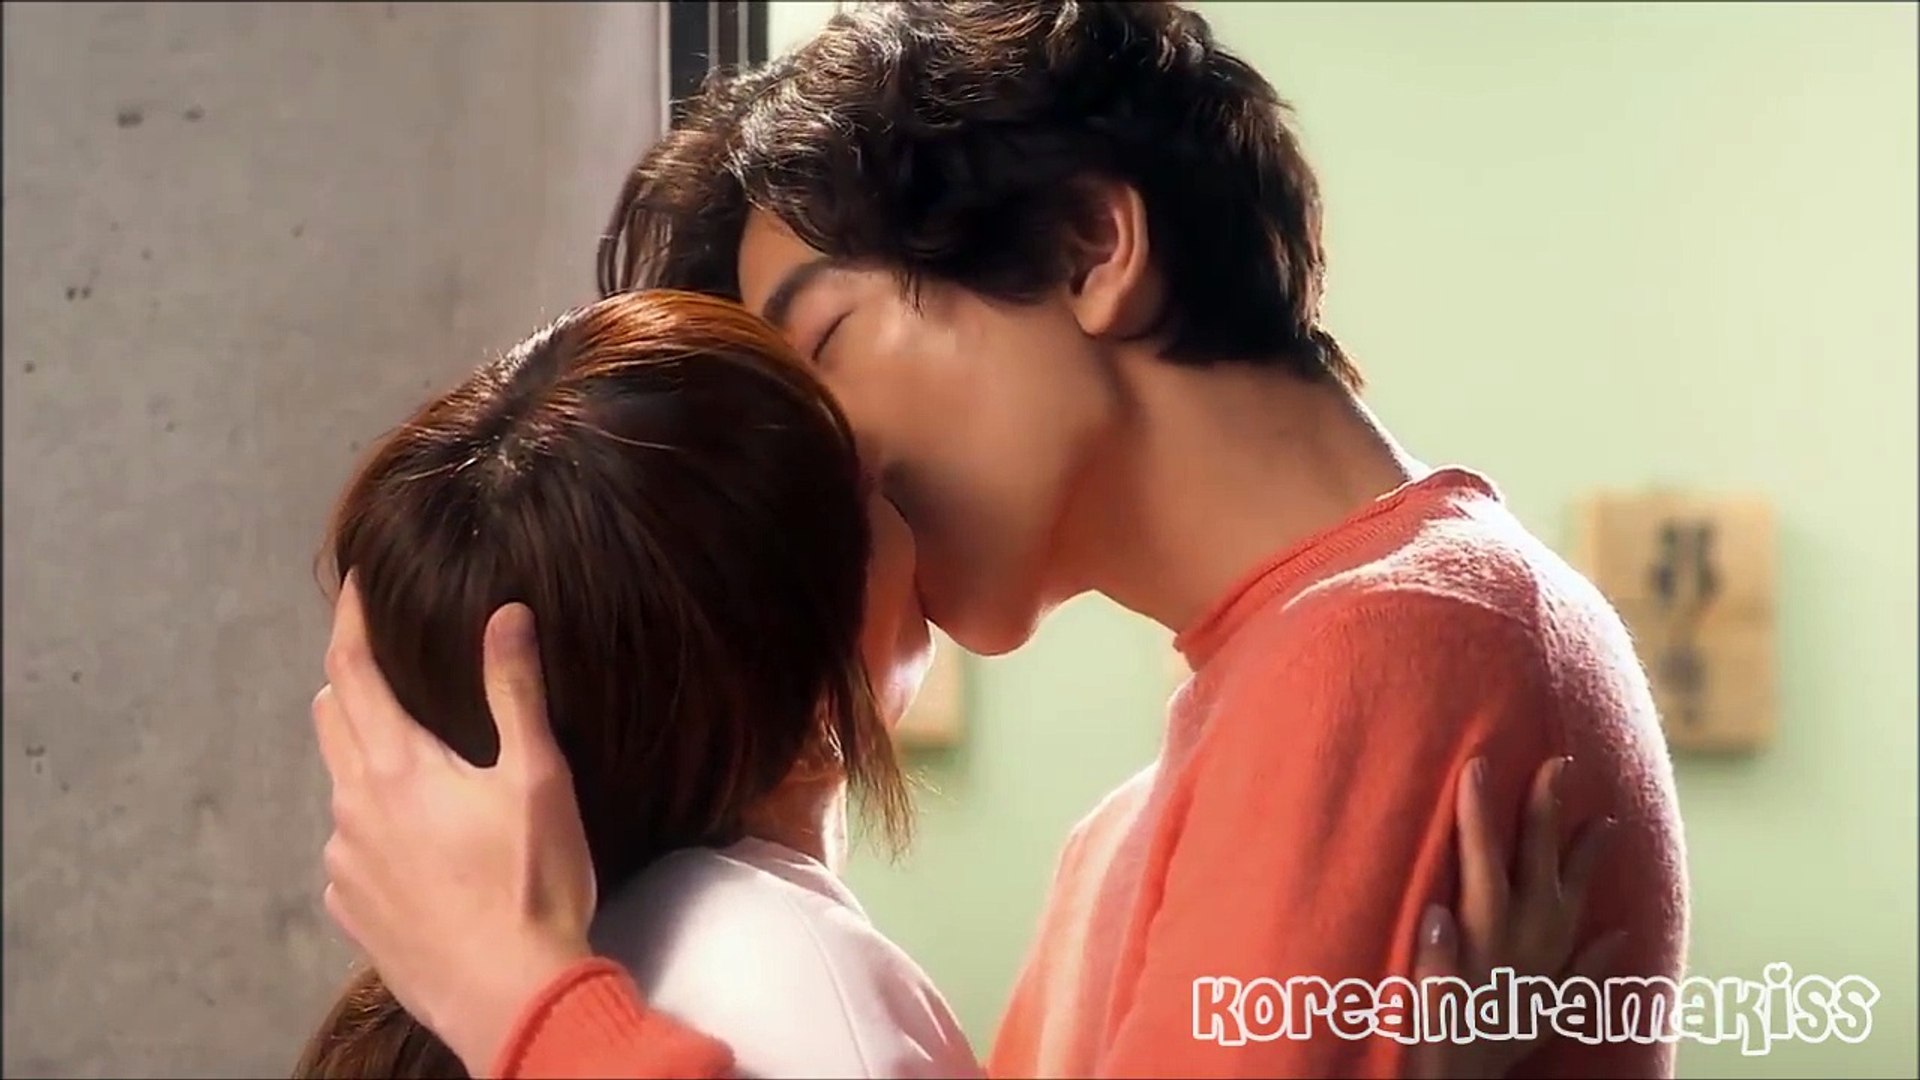 Korean Drama Kiss Scene Collection (7) - video Dailymotion